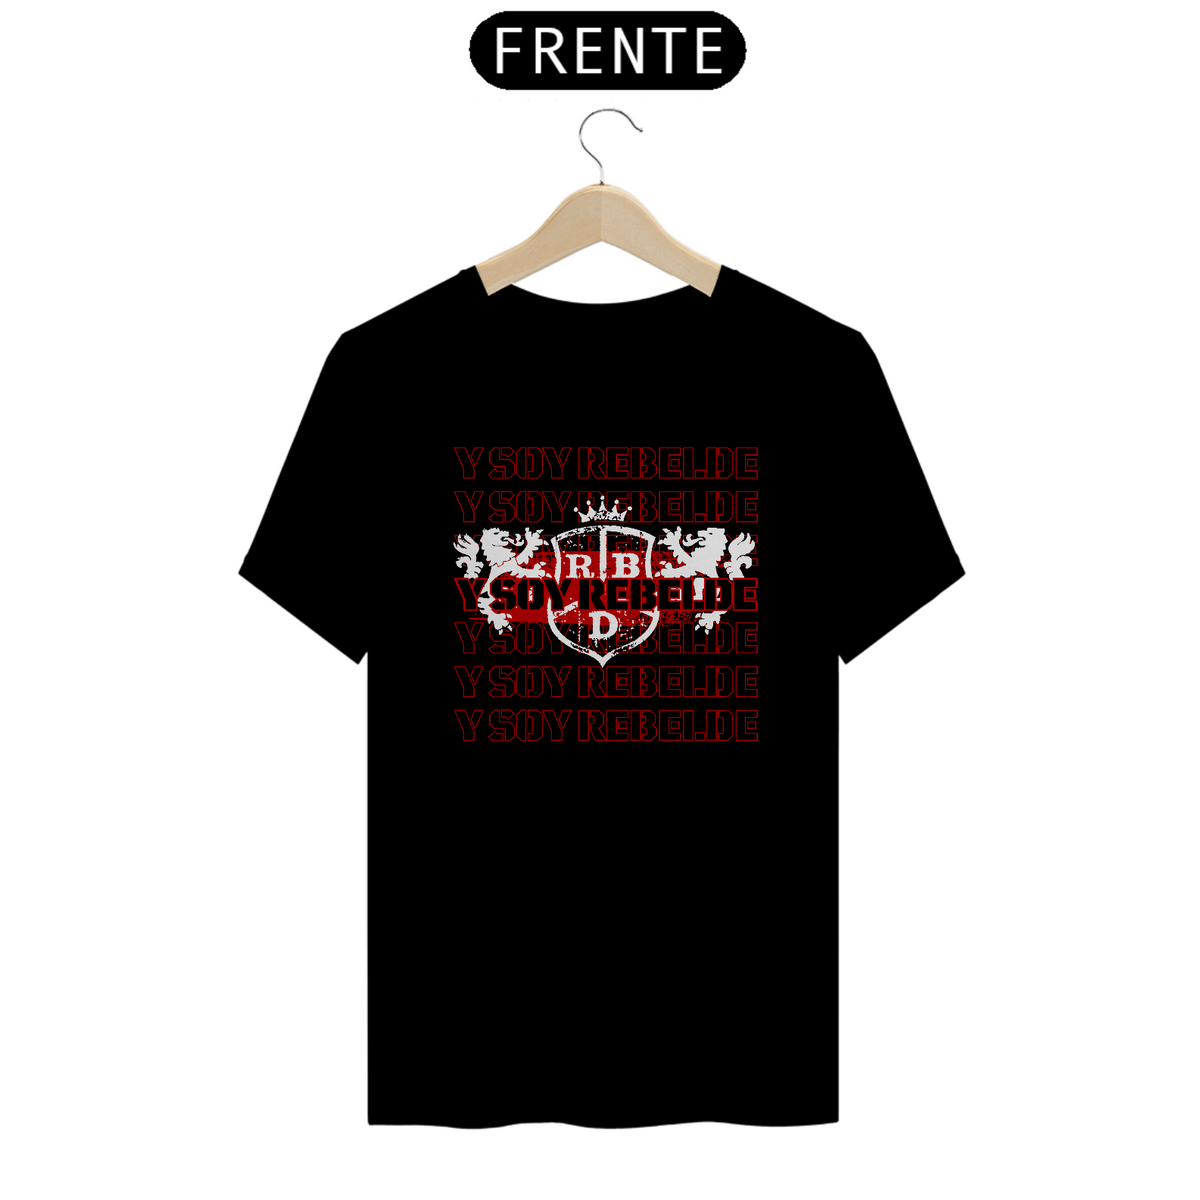 Nome do produto: Camiseta Y Soy Rebelde RBD Renner